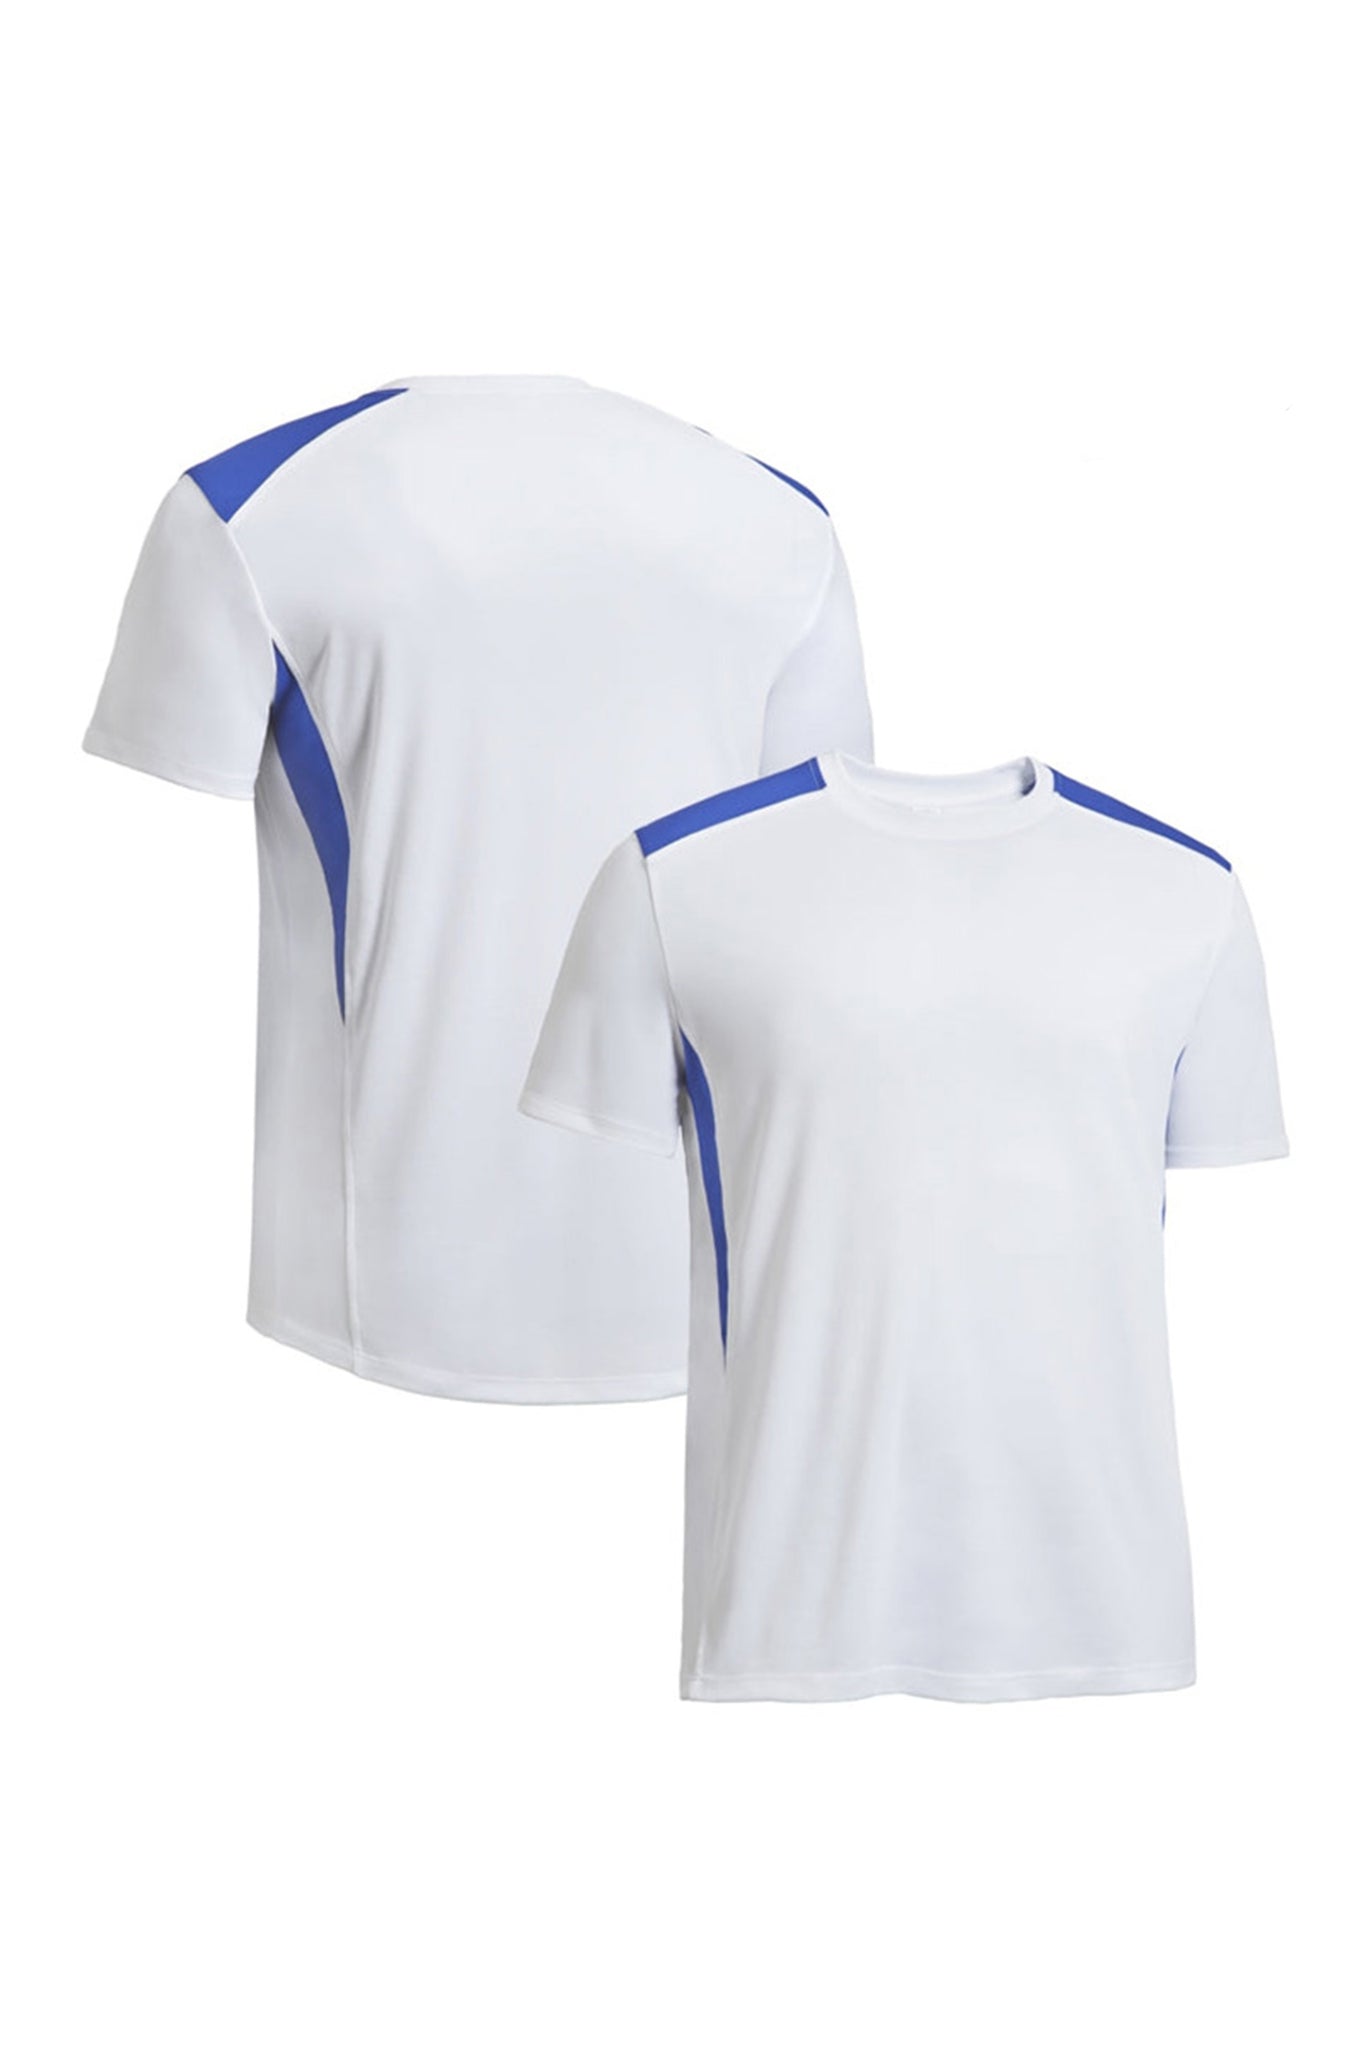 Expert Brand Wholesale Men's White Blue pk maX™ Stadium Tee#white-royal